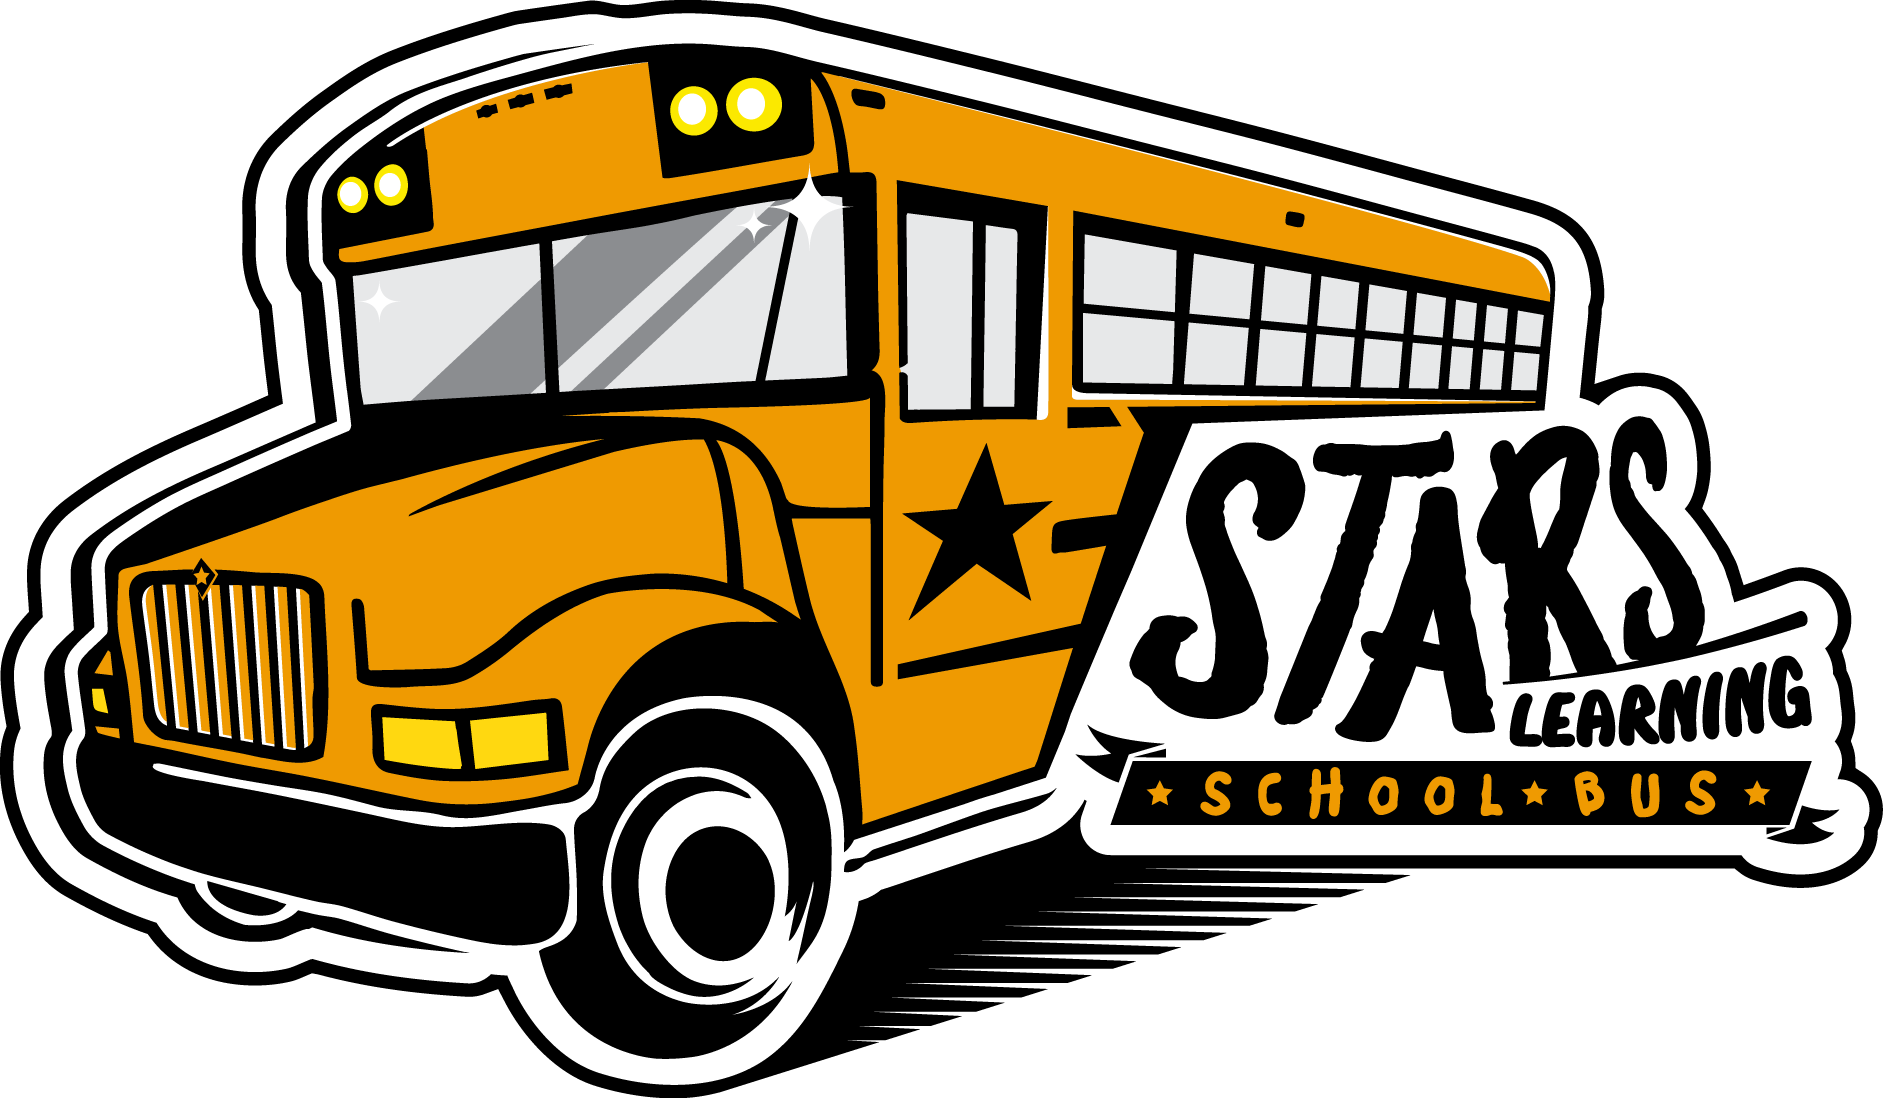 Info@starslearning - Com - School Bus (1883x1098)